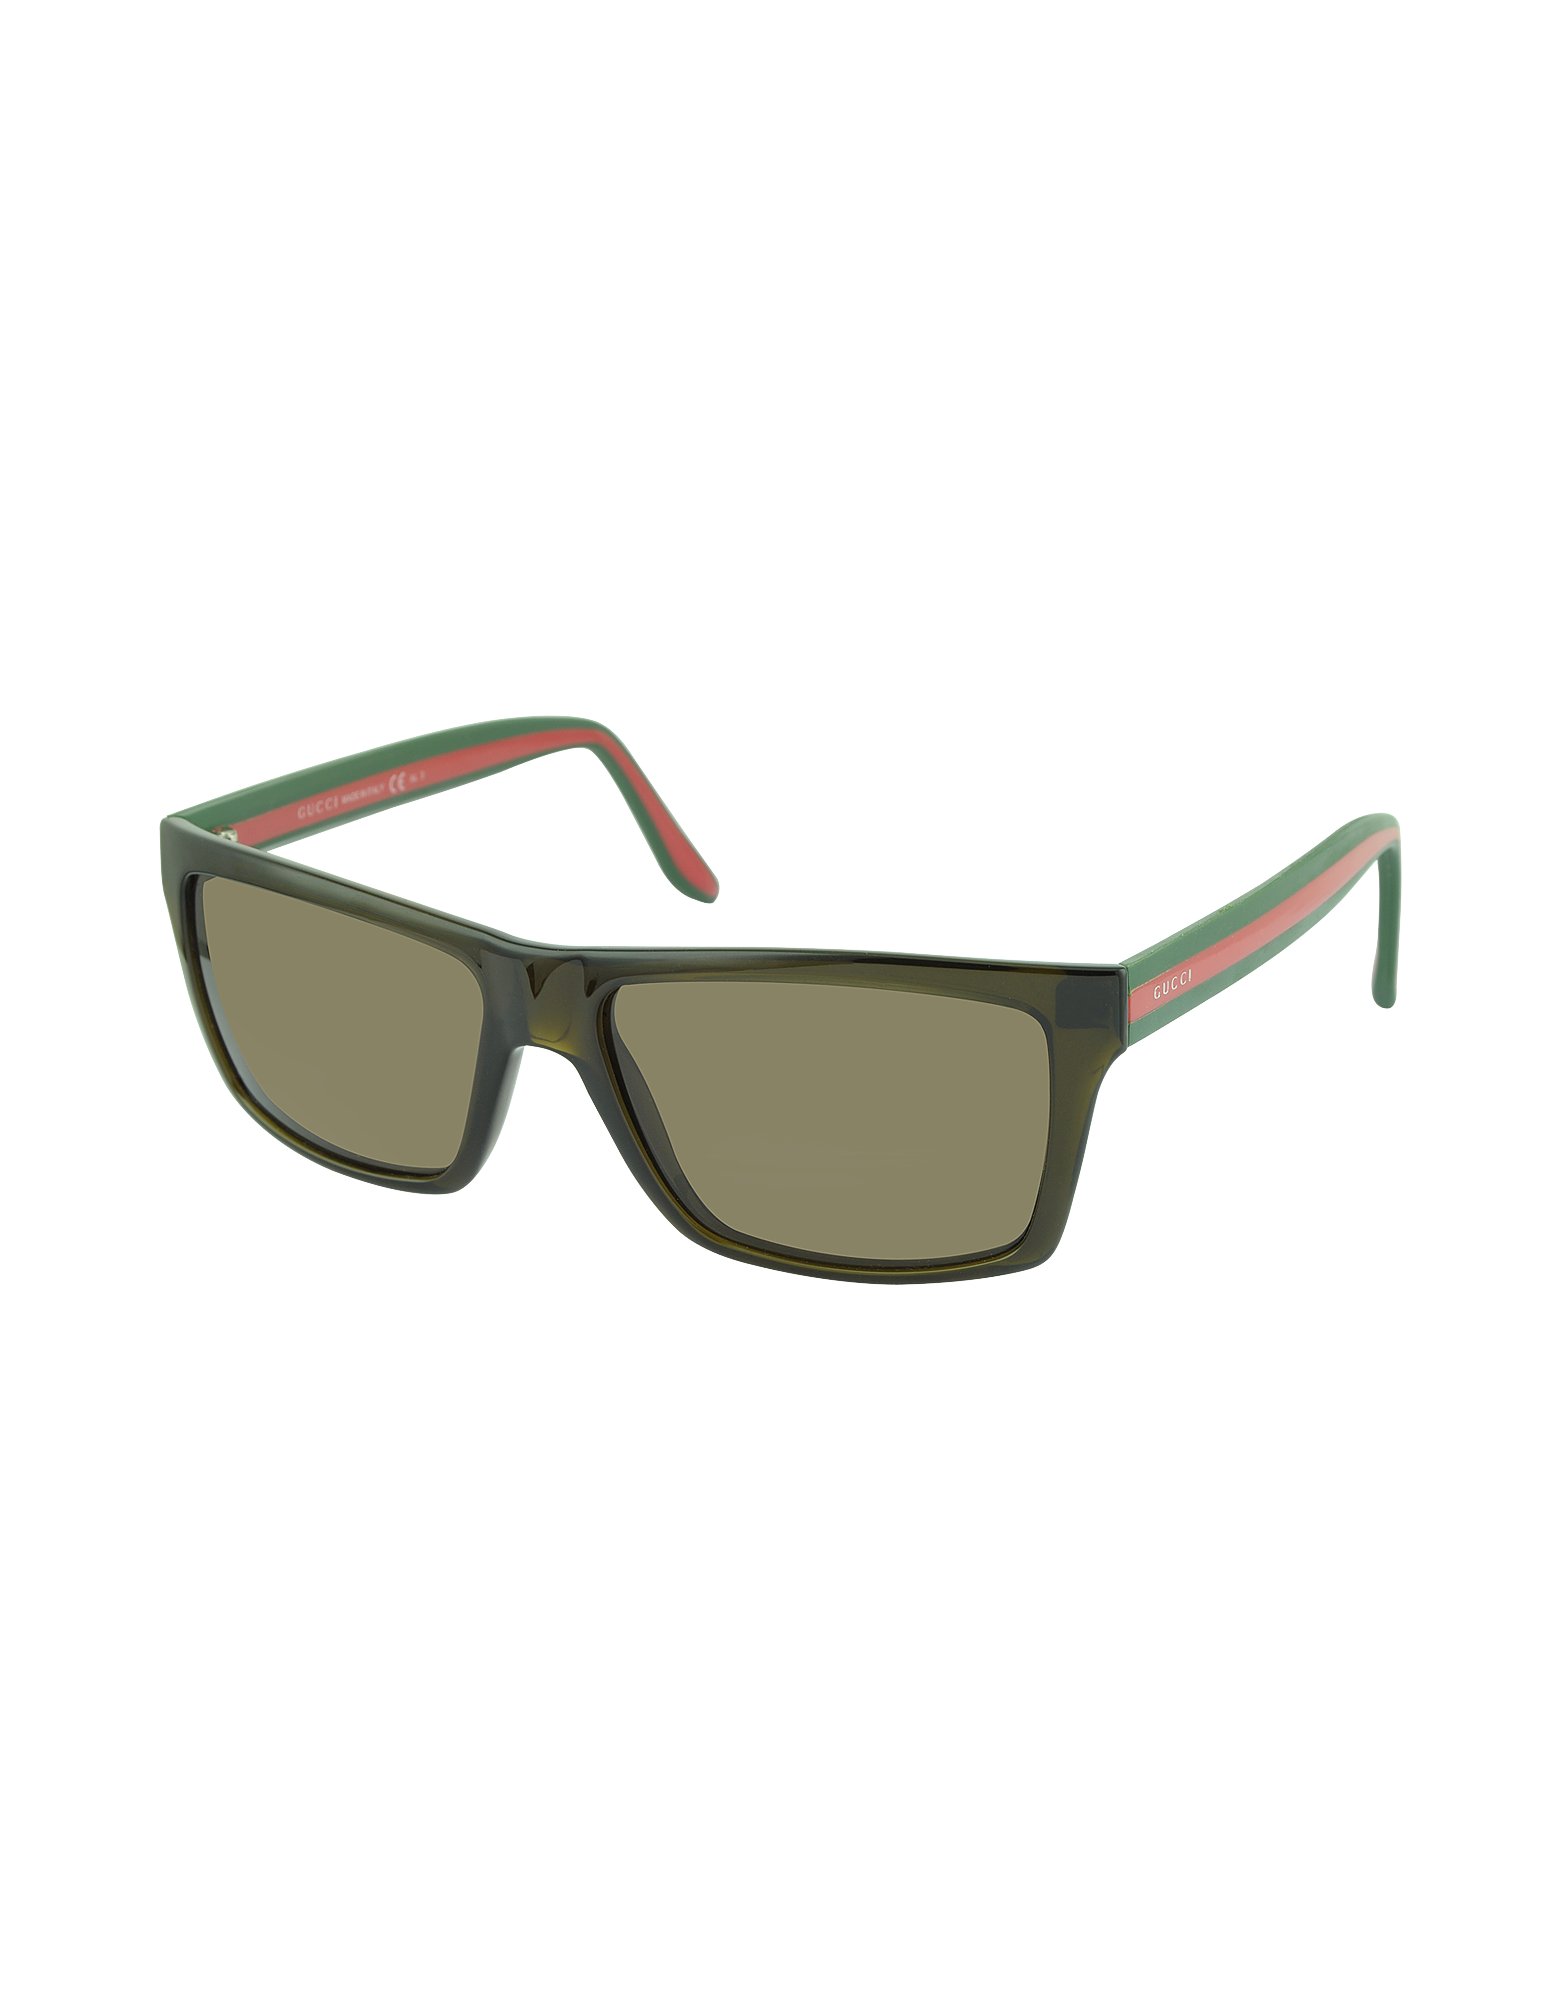 gucci sunglasses plastic frame